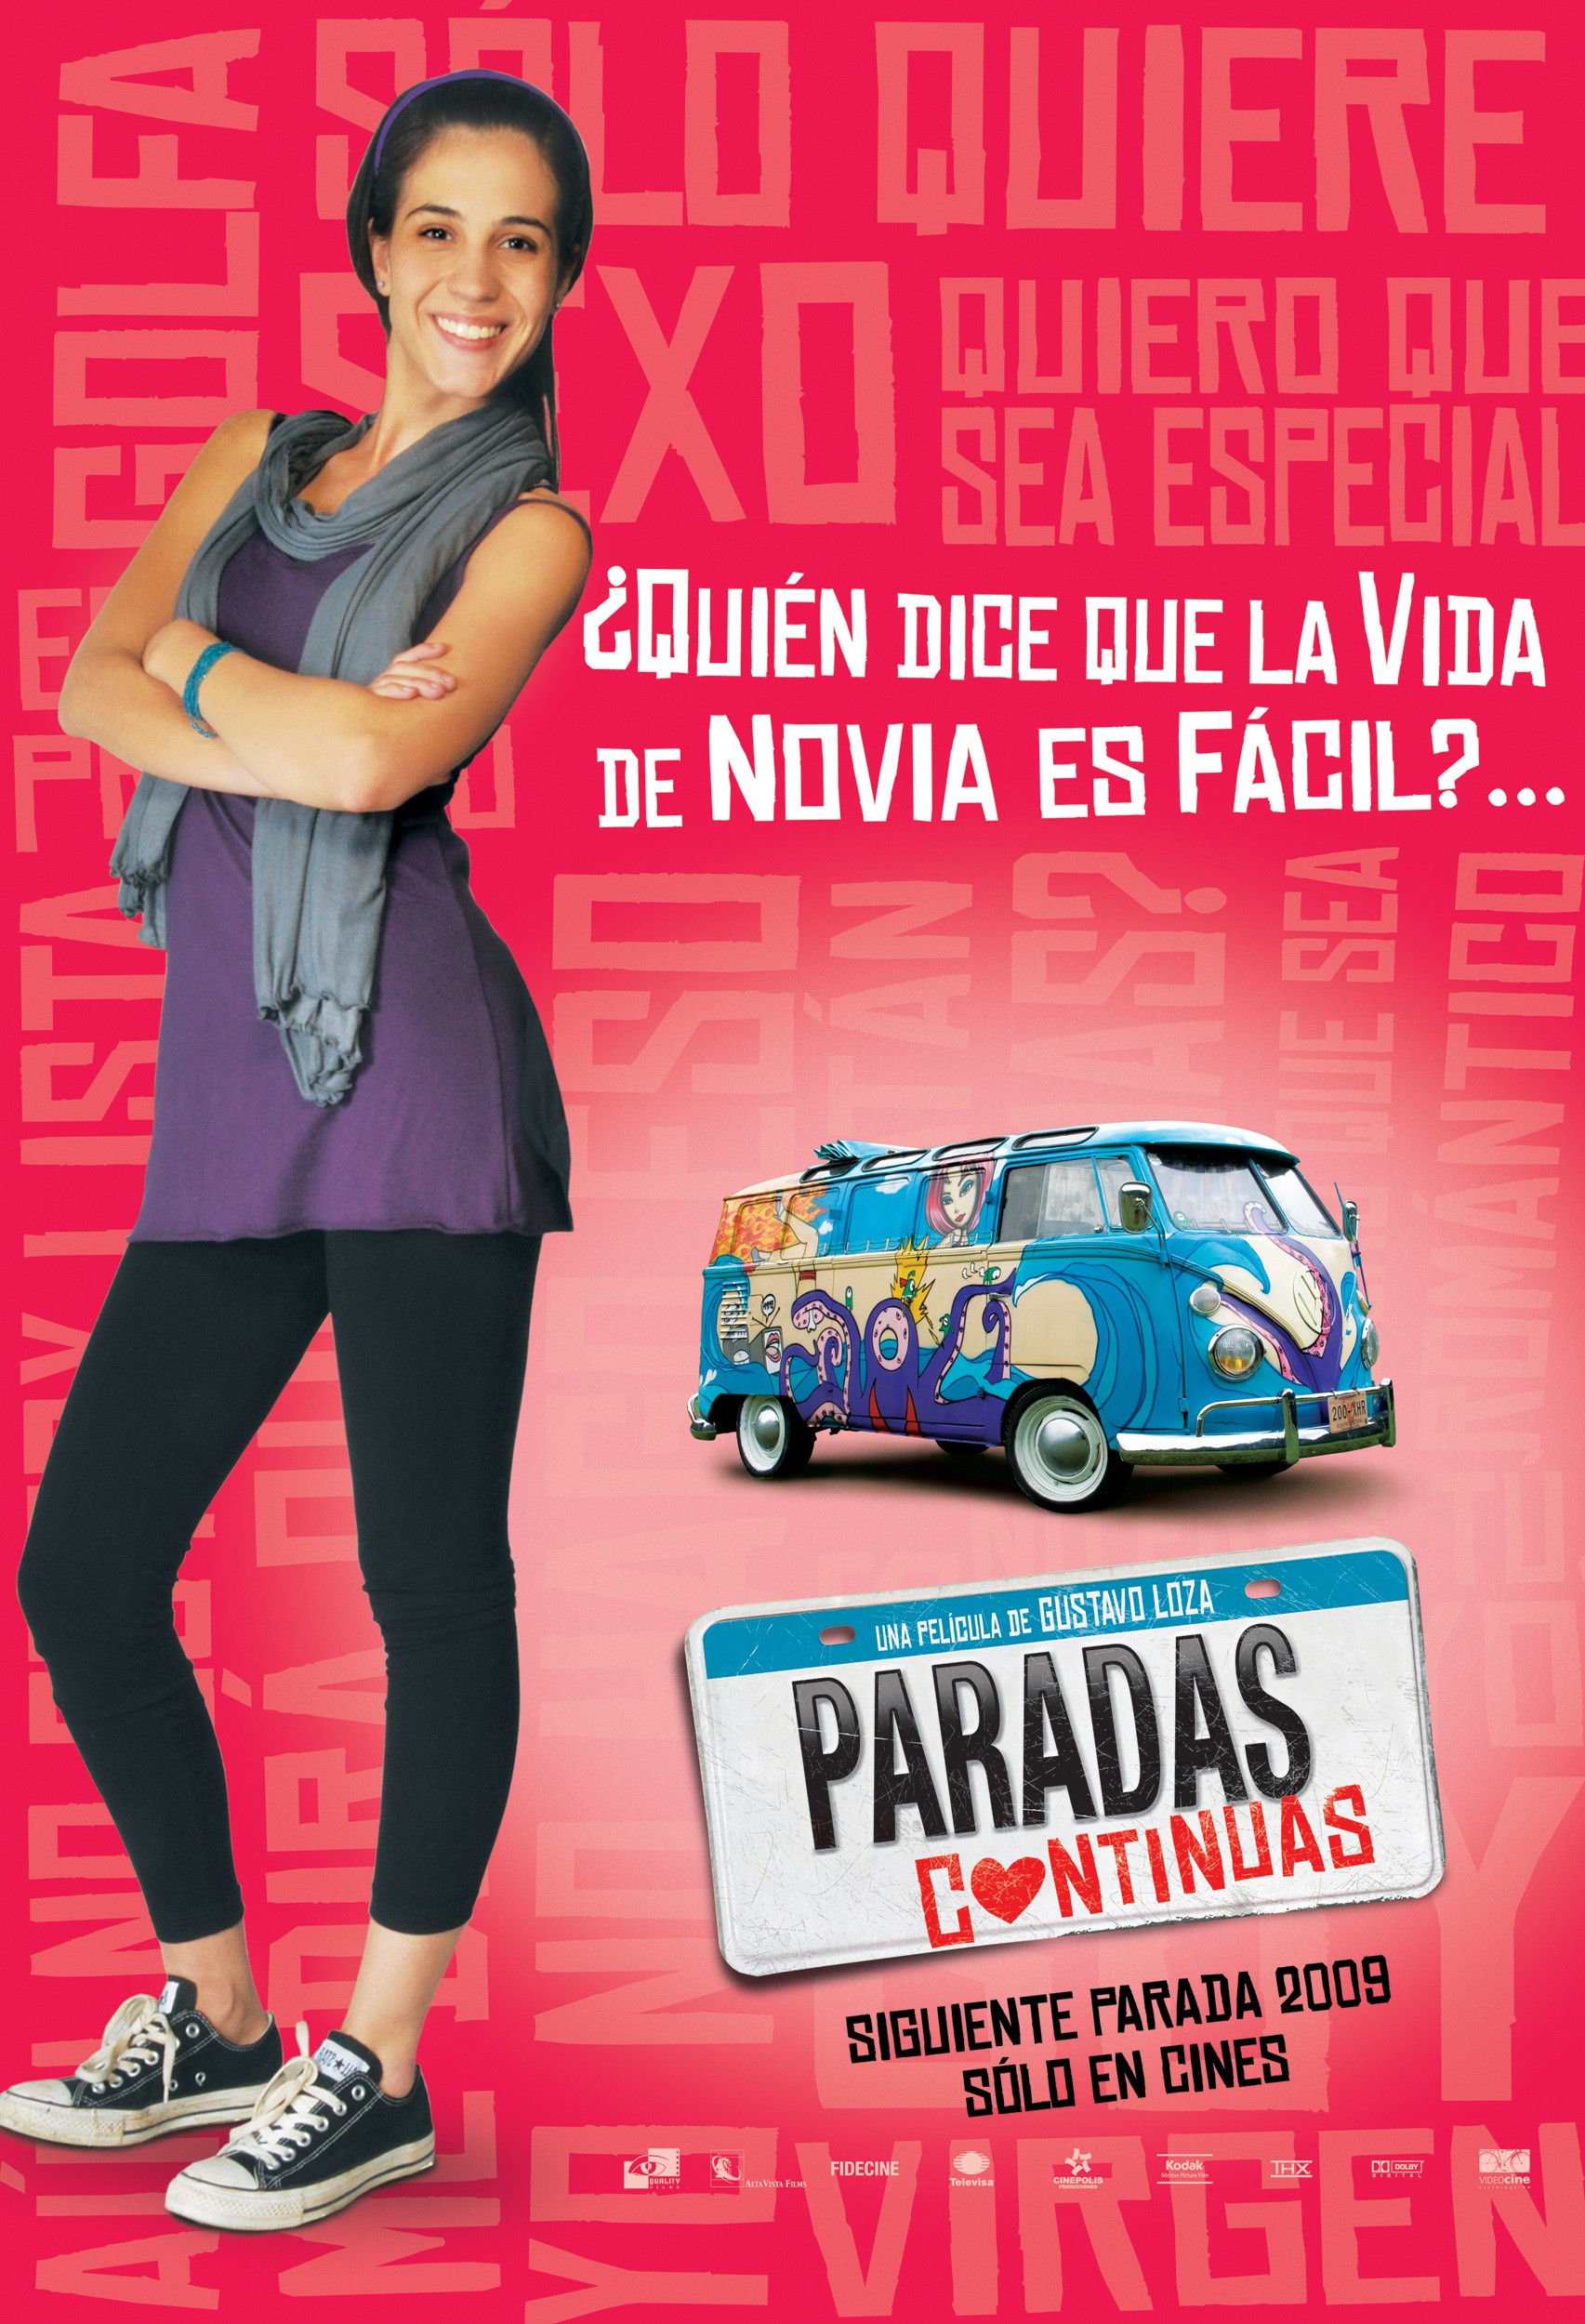 Mega Sized Movie Poster Image for Paradas continuas (#4 of 5)